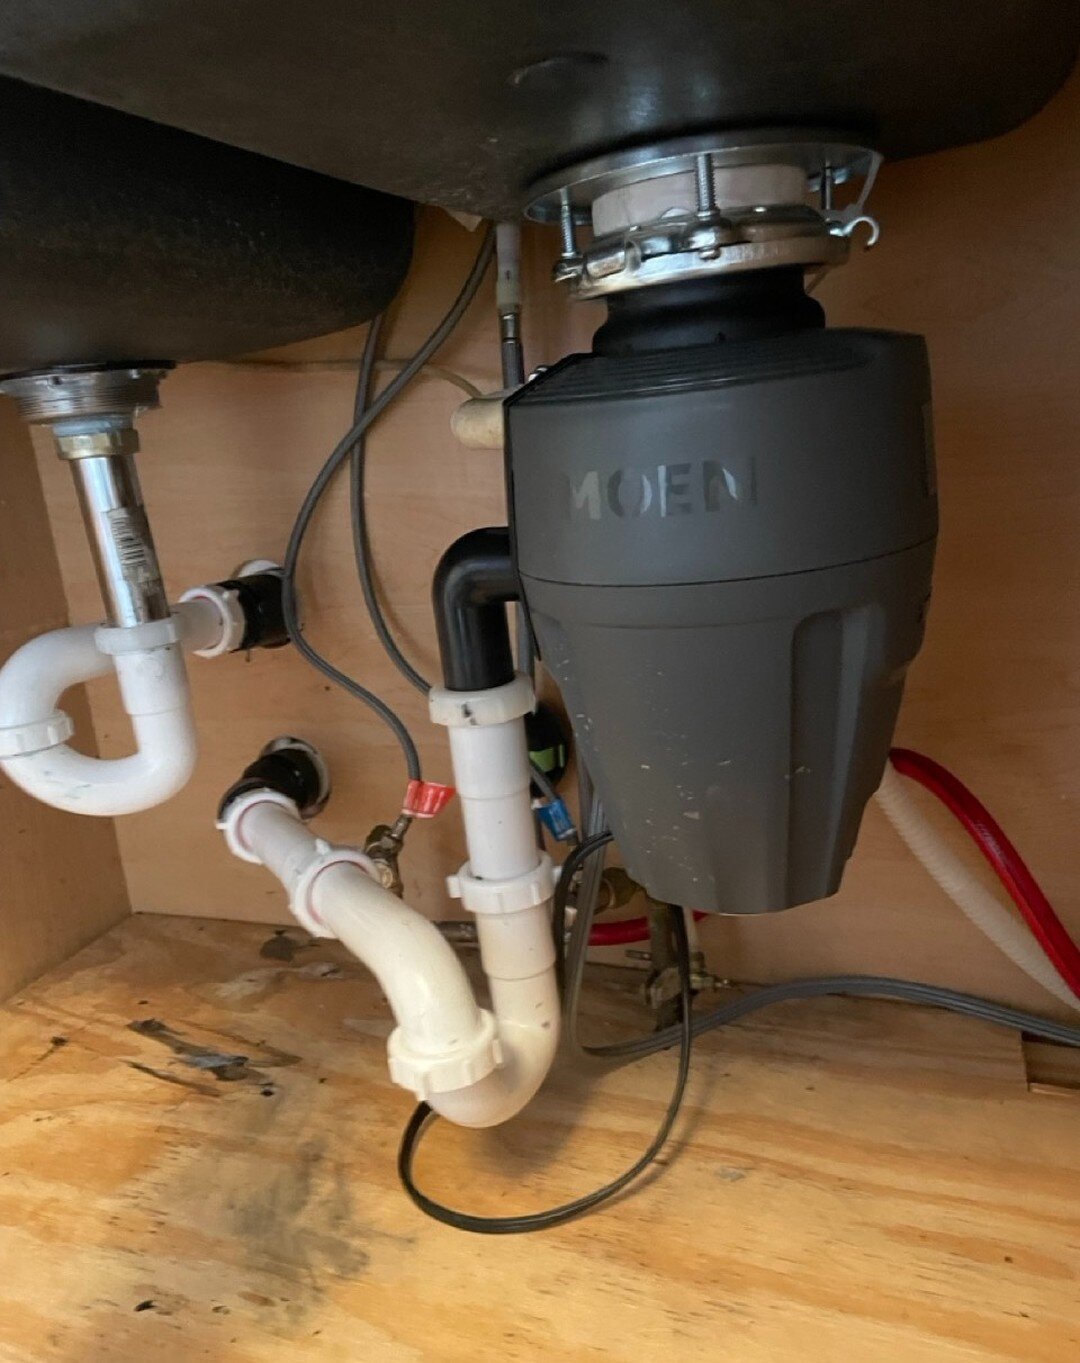 John at Drains Great makes plumbing repairs easy. He fixes leaks, replaces pipes, and solves water pressure issues, restoring your system's functionality. 

#plumbingrepair 
#denversbest